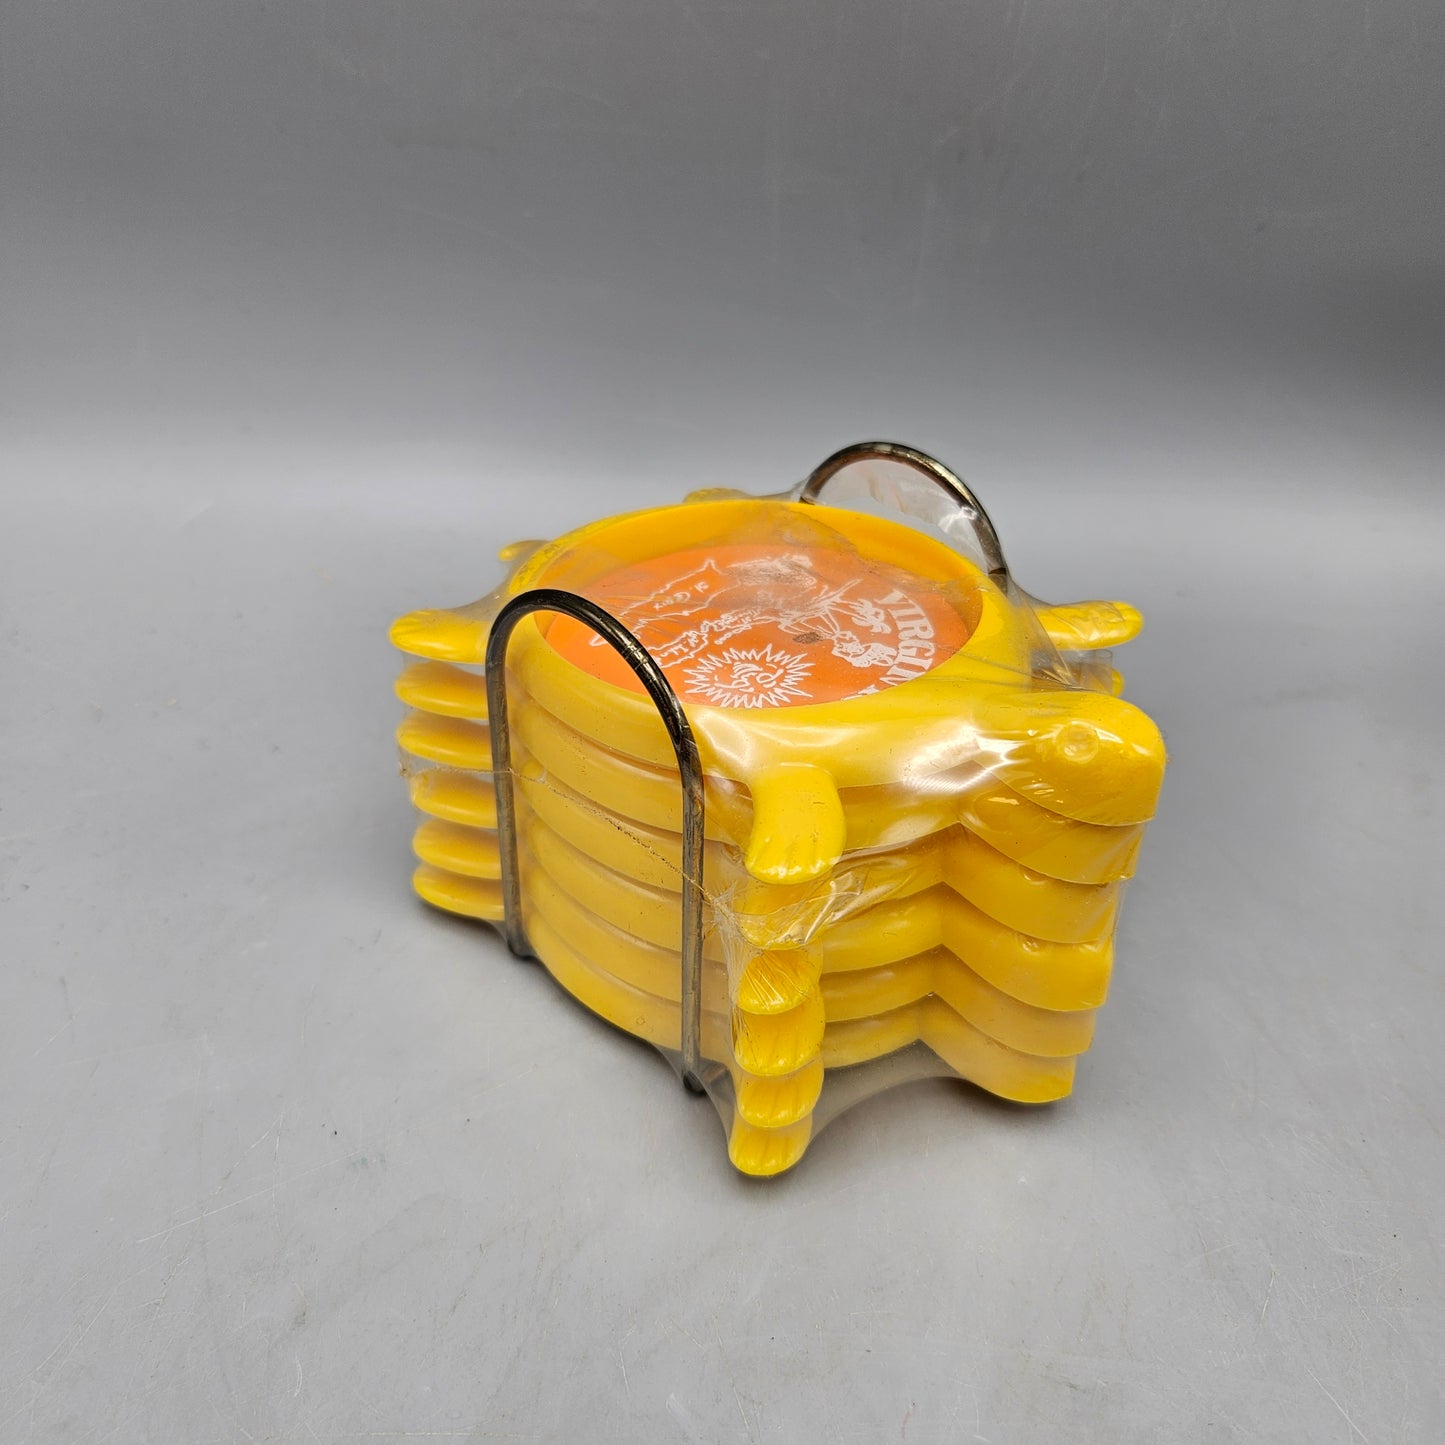 6 Vintage 1970's Plastic Turtles Virgin Islands Coasters Orange & Yellow with Holder